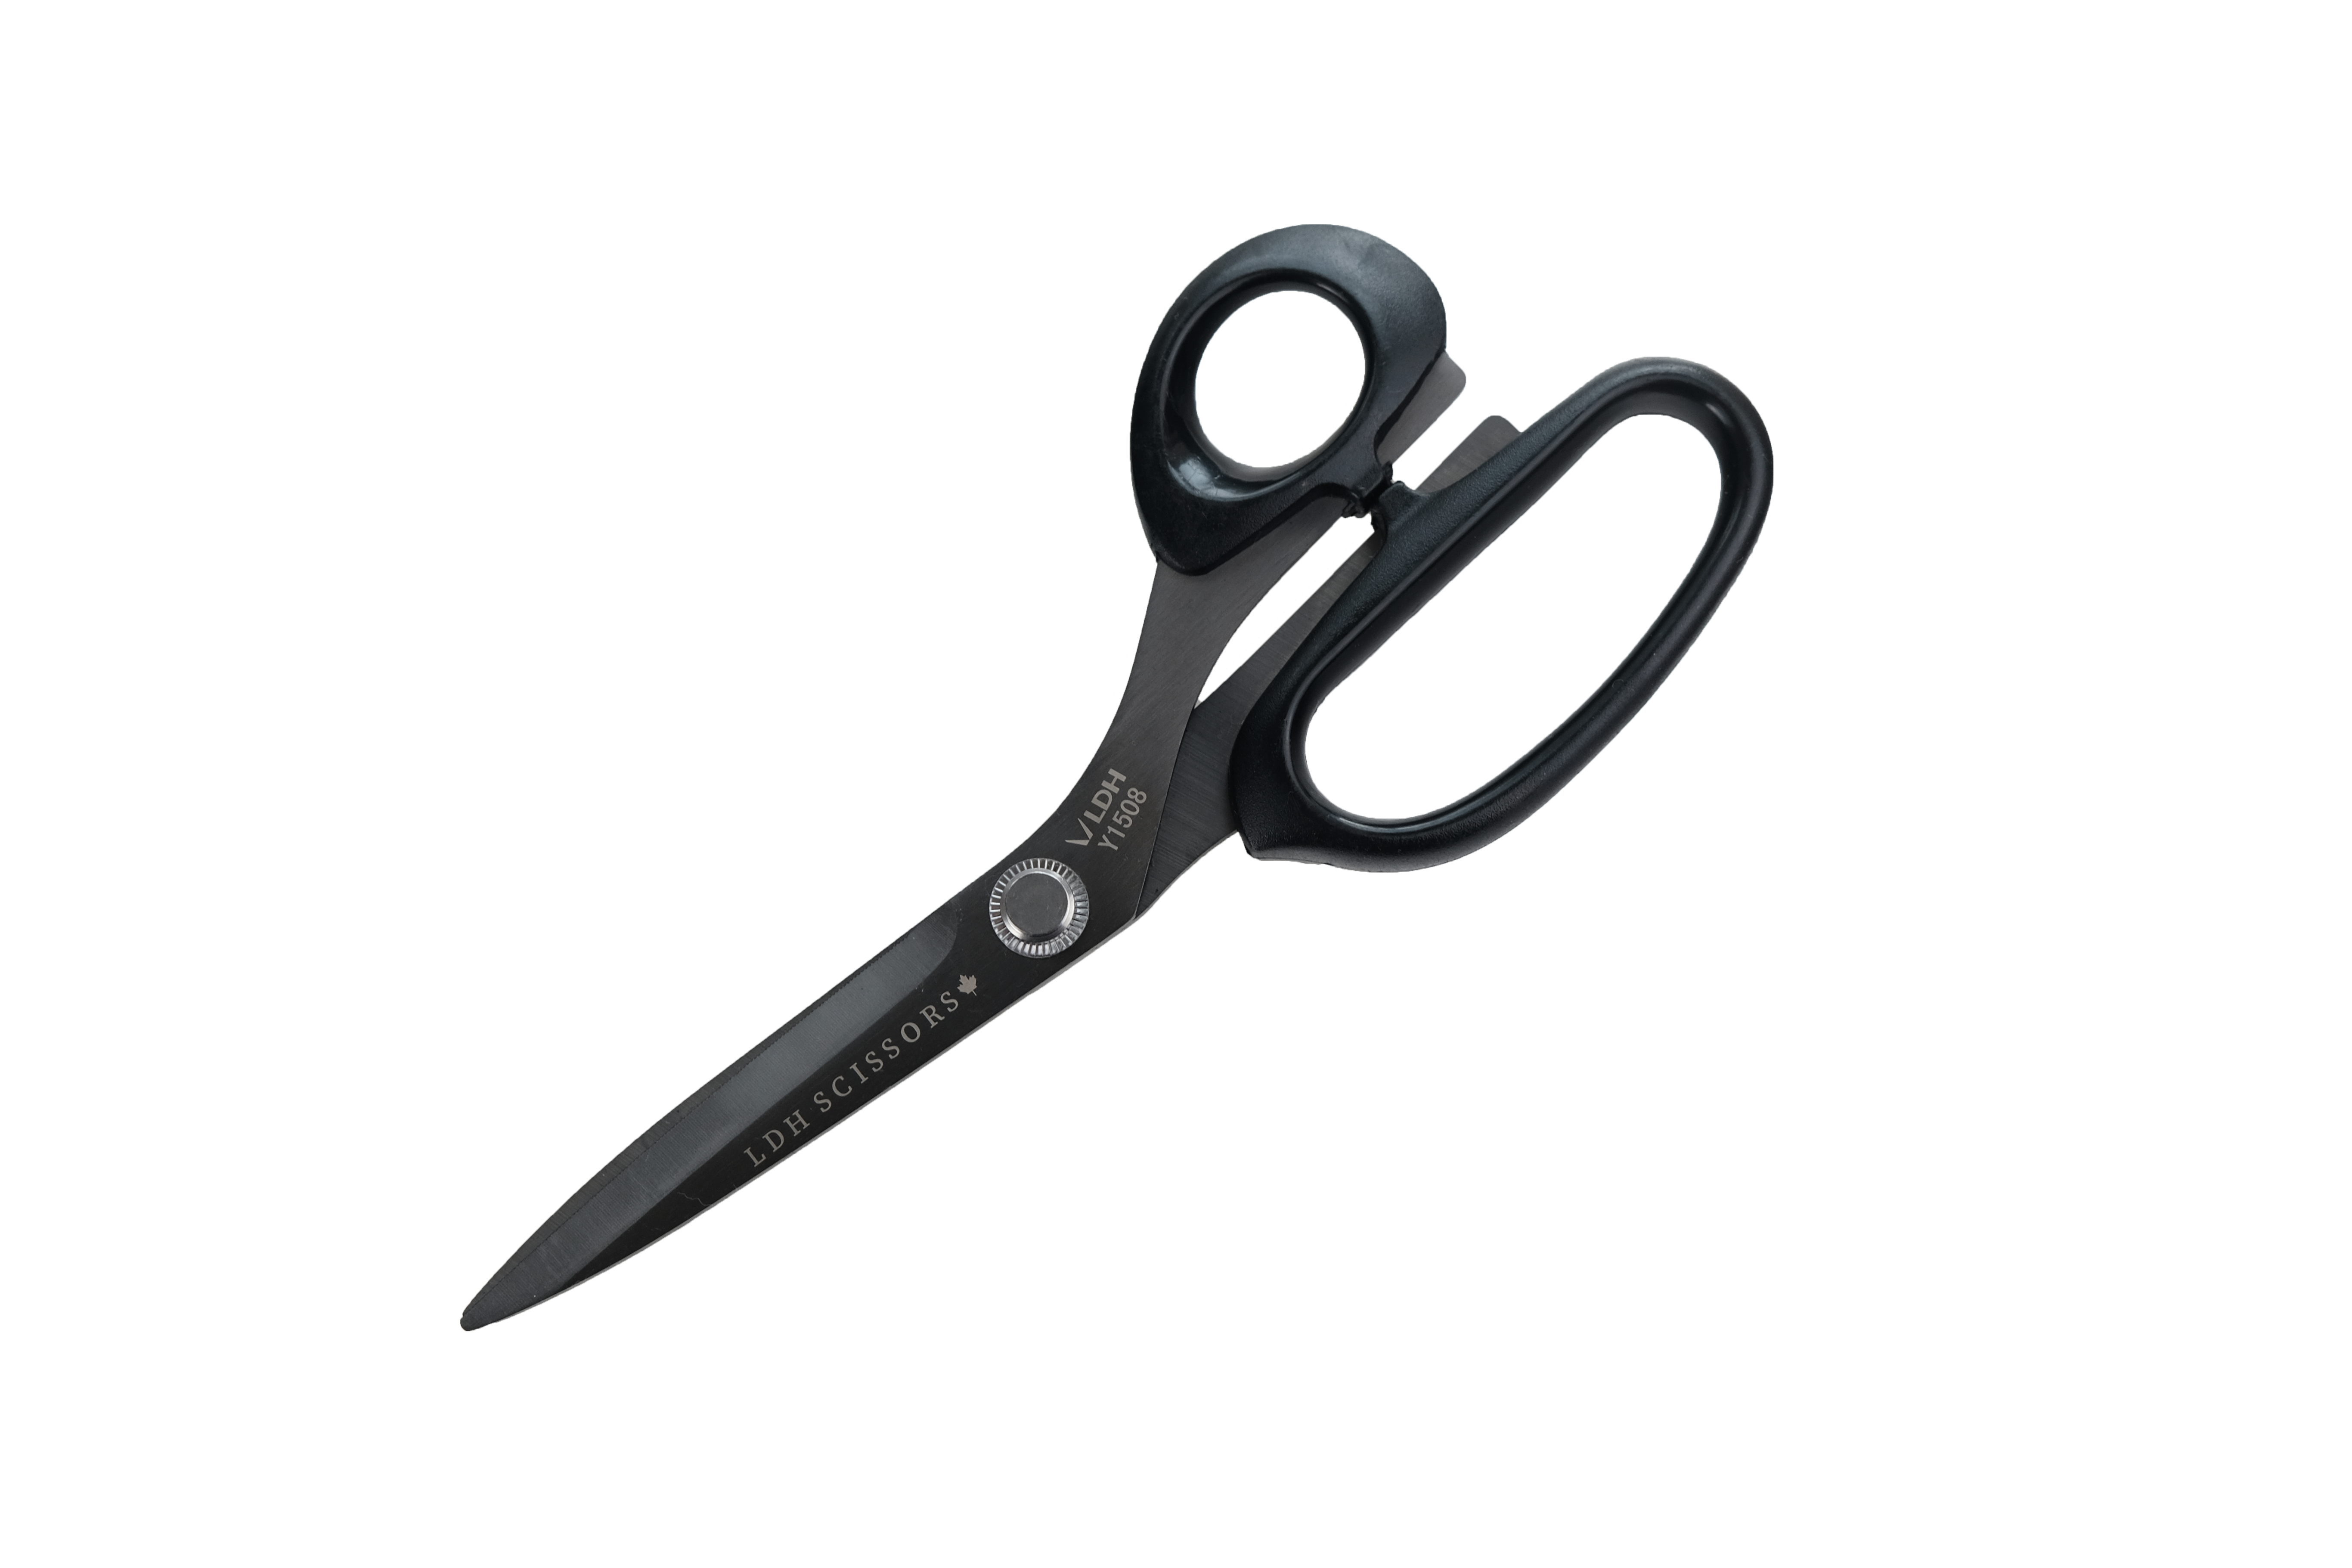  XFasten Sewing Scissors for Fabric Cutting Black 9.5